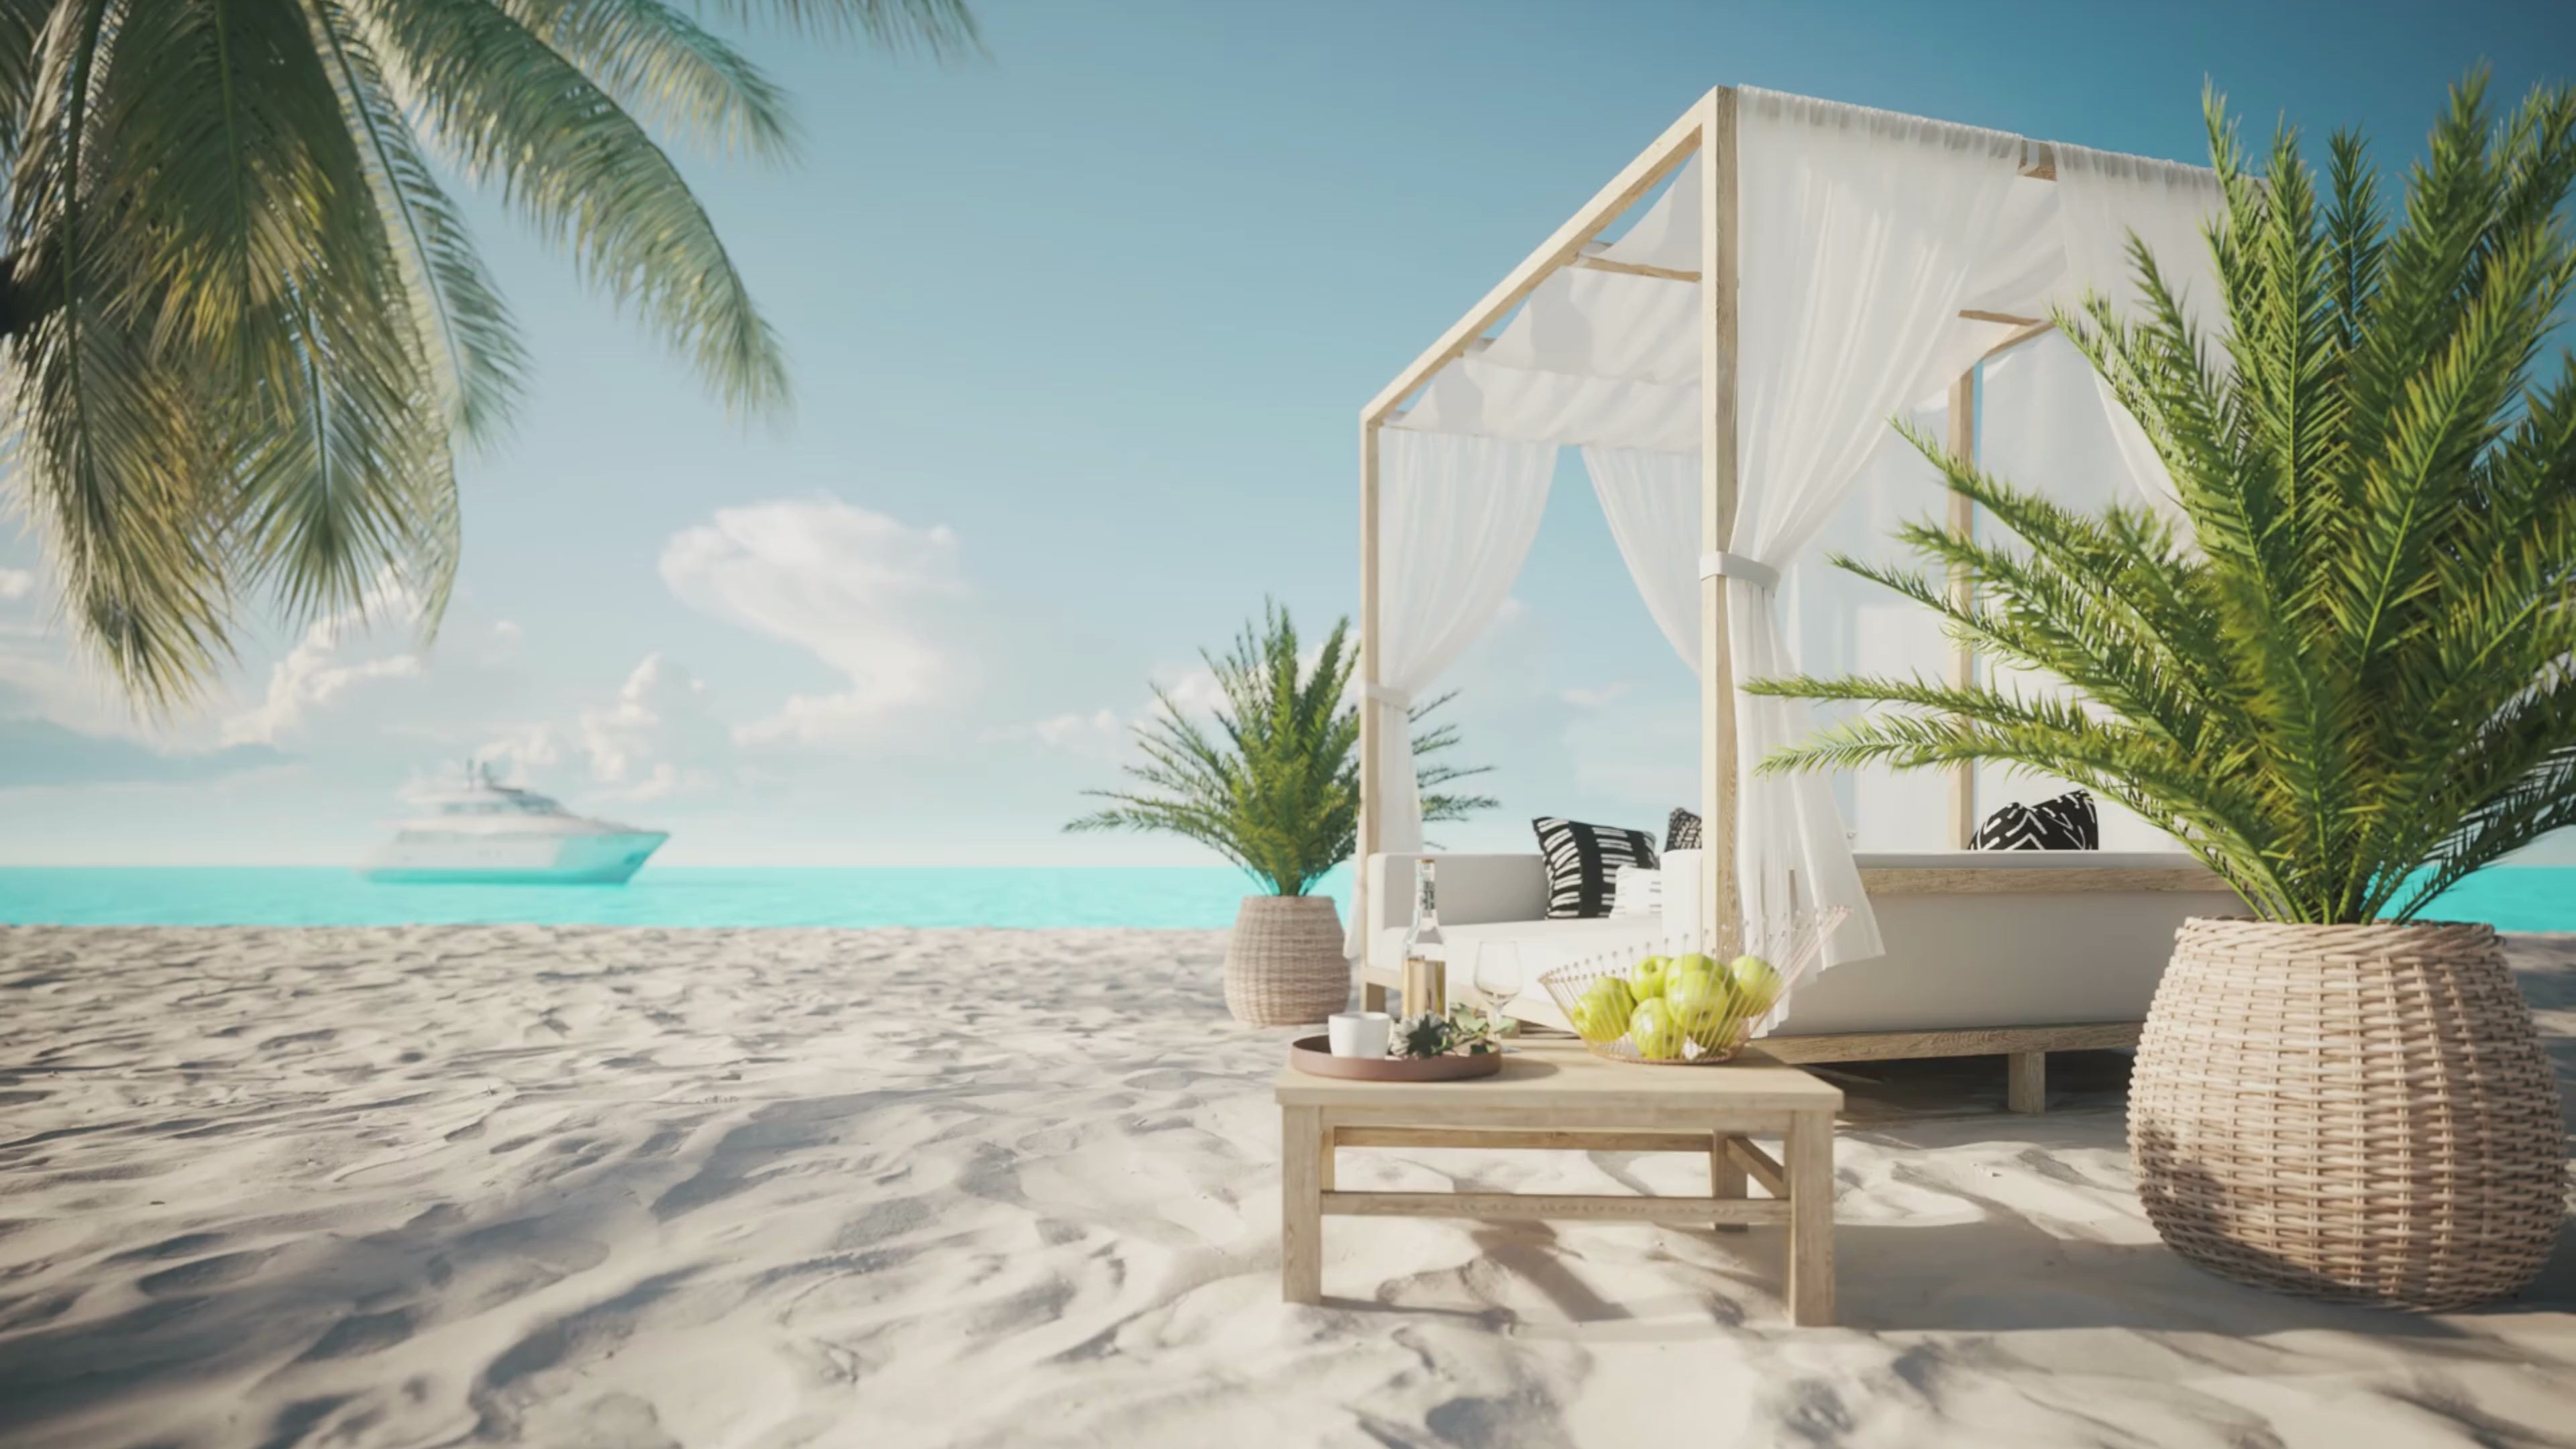 Load video: Beach cabana on water